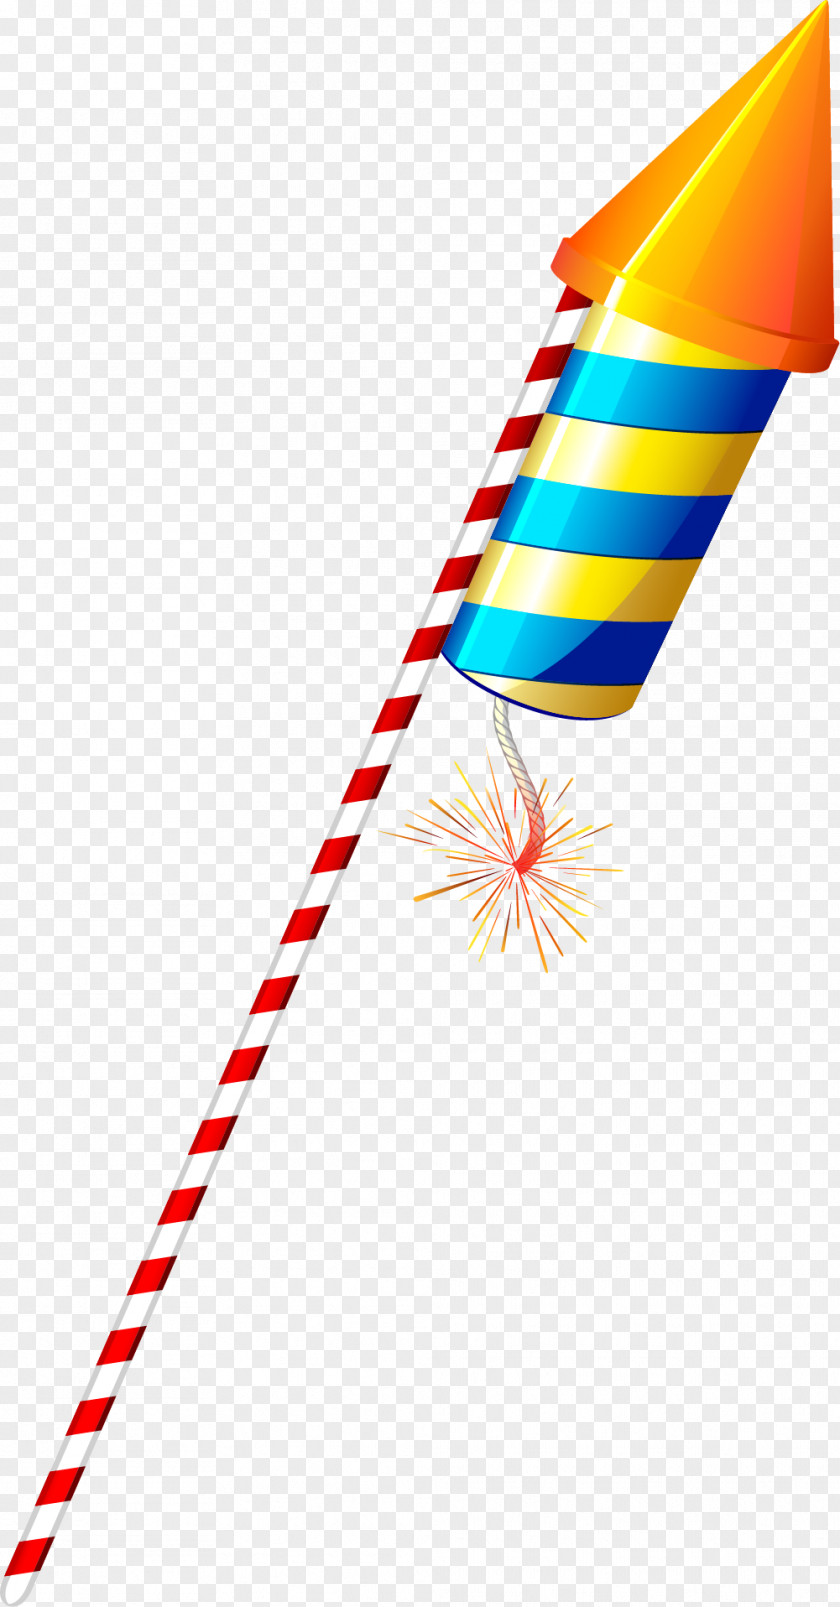 Cartoon Colorful Fireworks Diwali Firecracker Sparkler Clip Art PNG